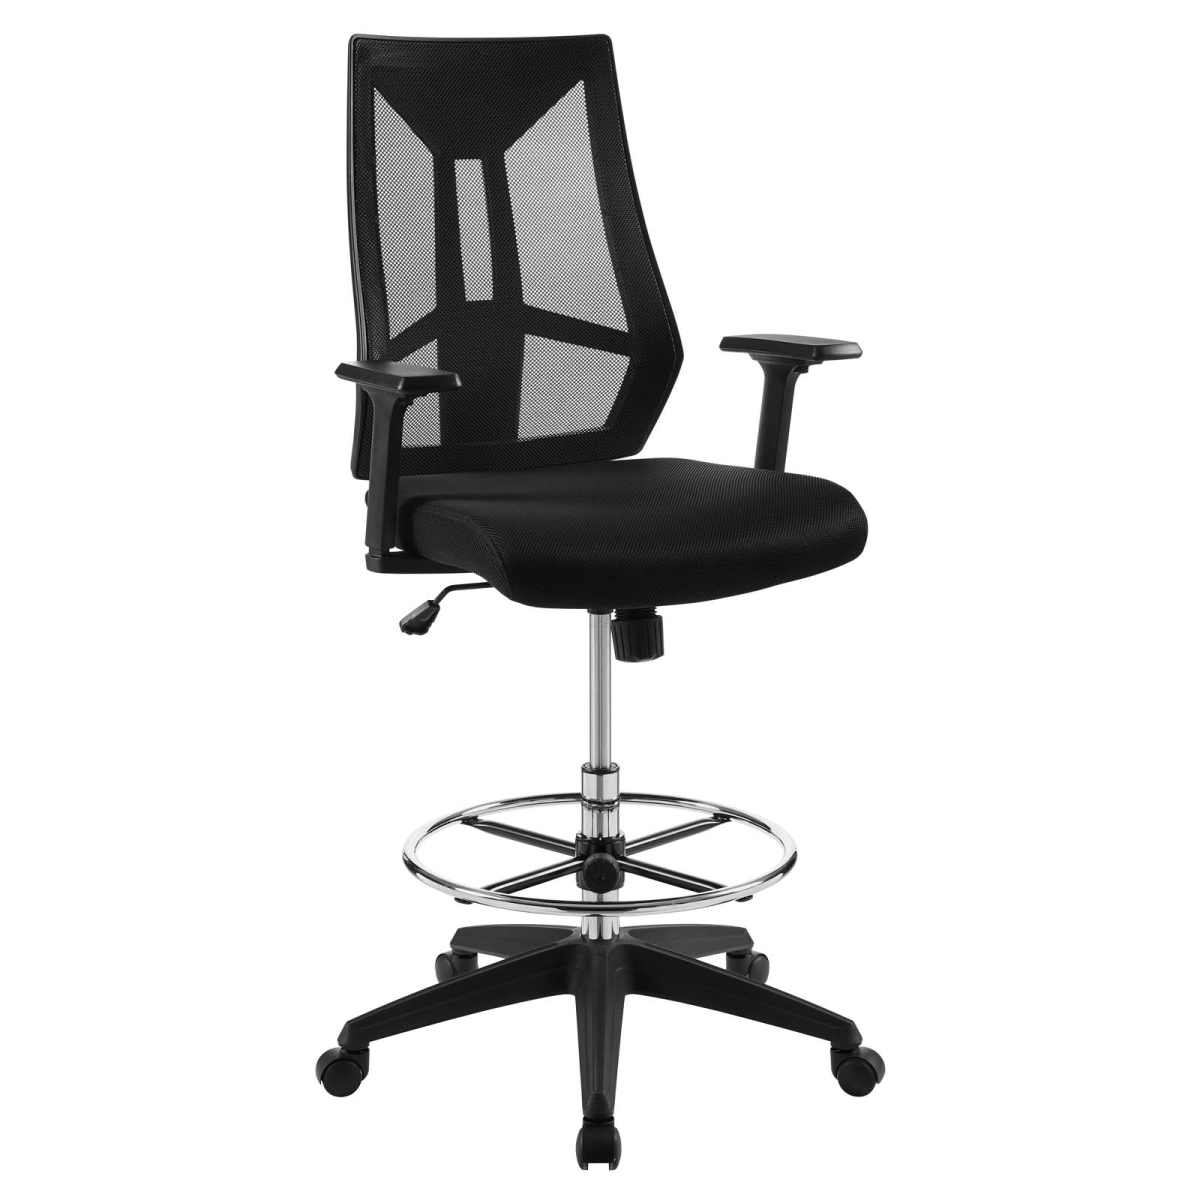 Eei-3192-blk Extol Mesh Drafting Chair - Black, 52 X 26.5 X 27 In.